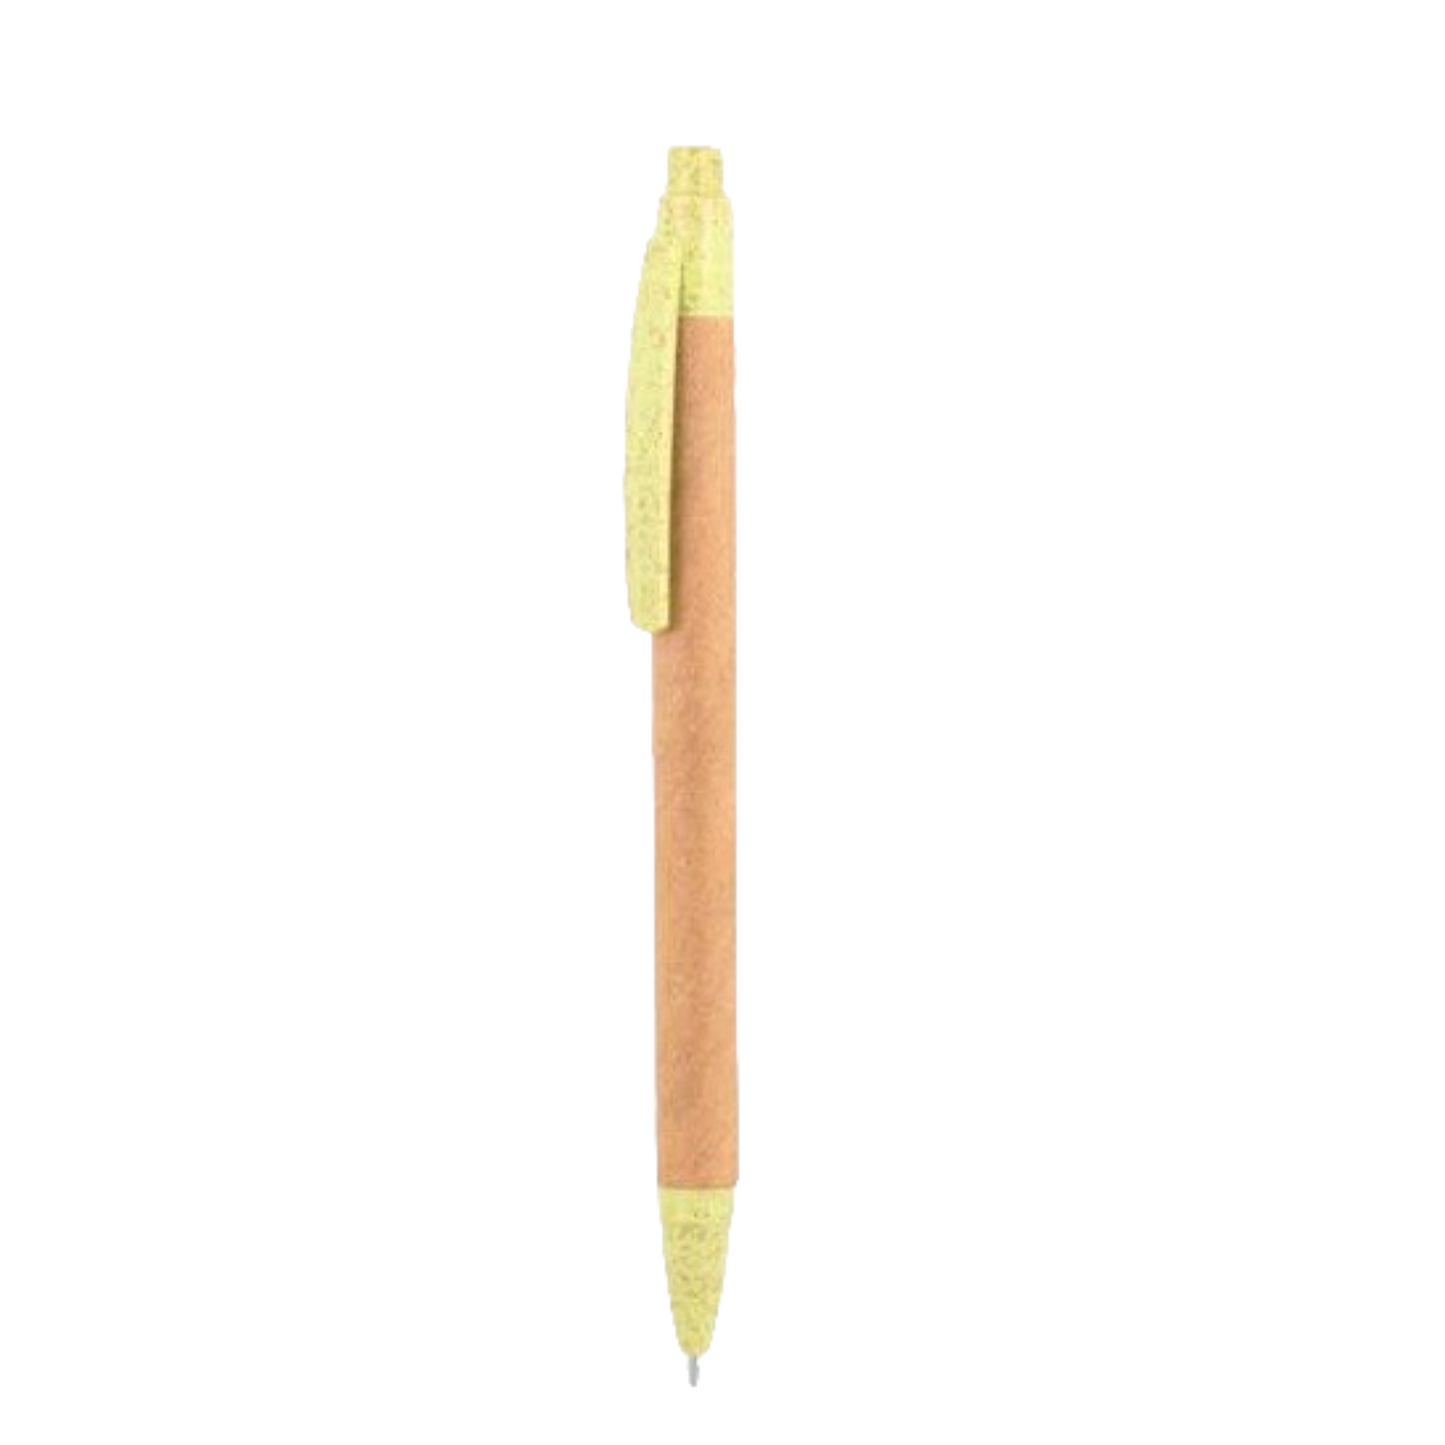 Bolígrafo ecológico de fibra de trigo y cartón